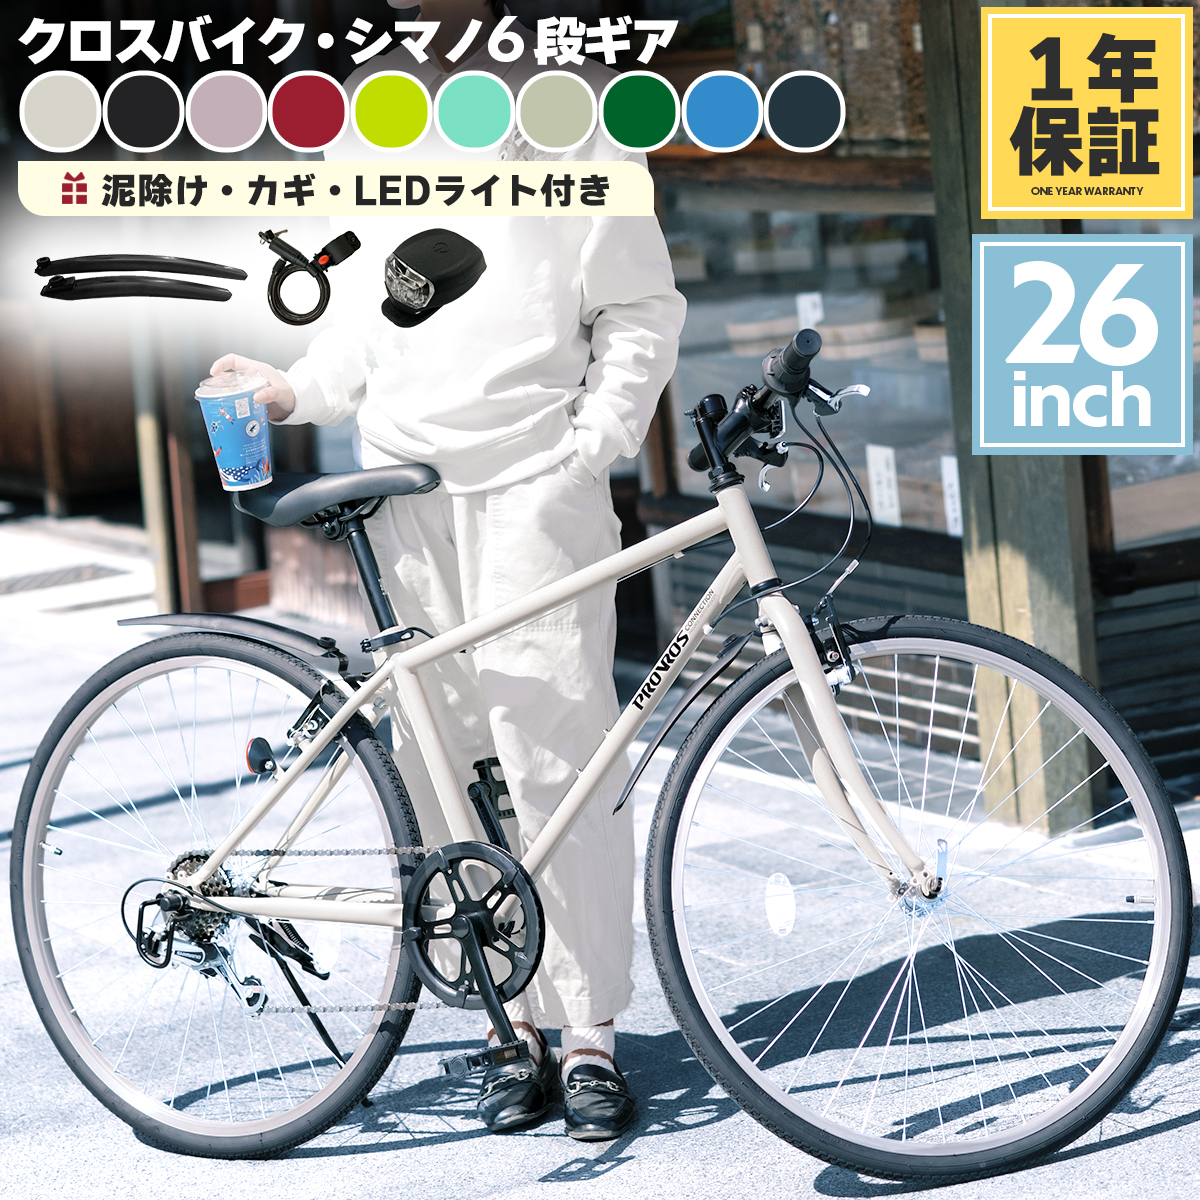 PROVROS クロスバイク 自転車 26インチ シマノ6段変速ギア 泥除け LED 